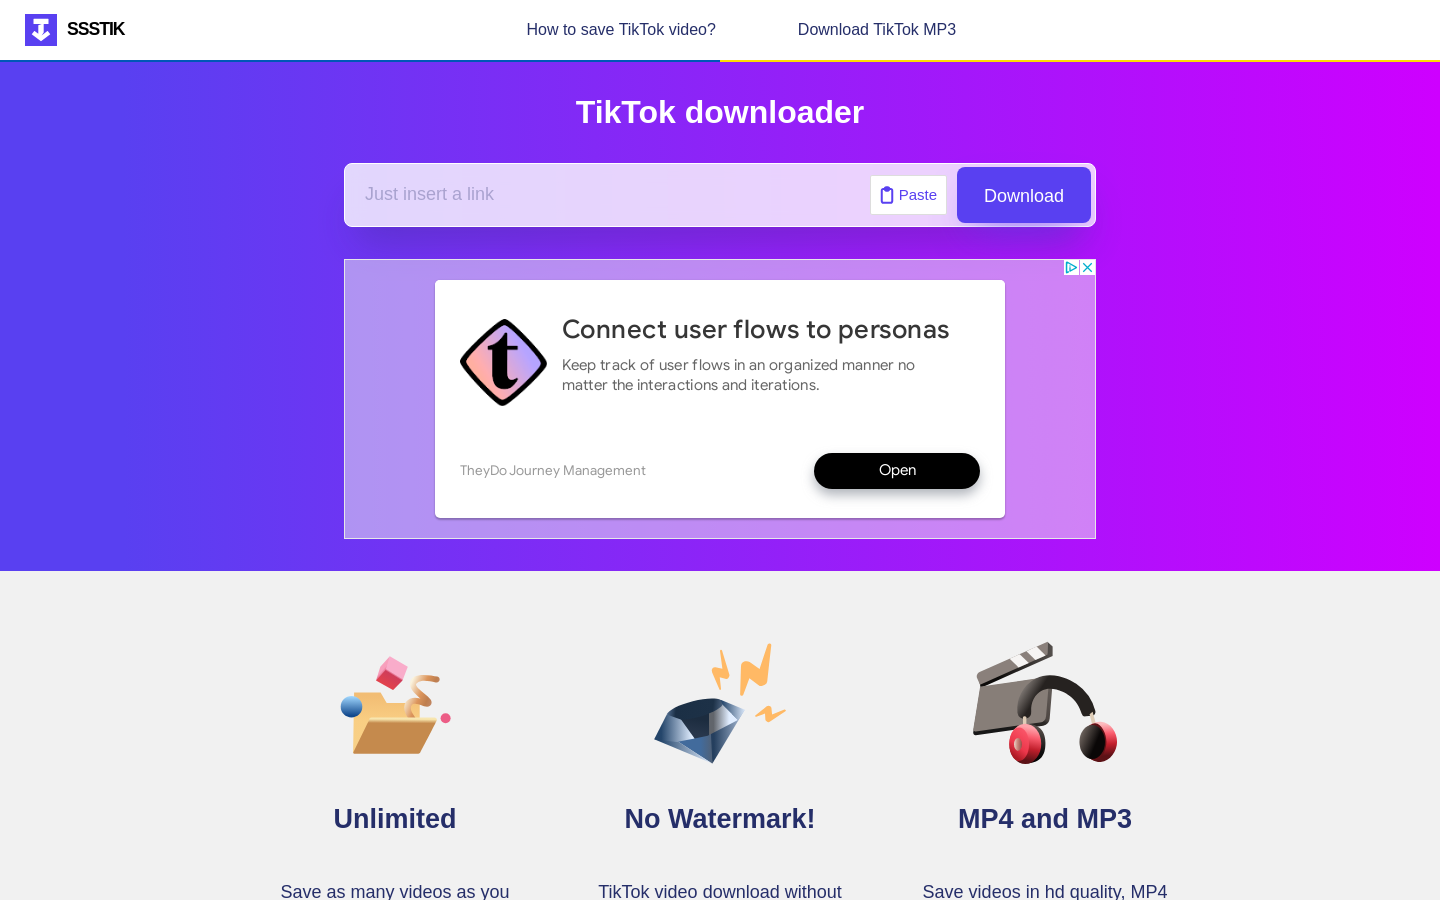 TikTok Downloader by SSSTIK preview